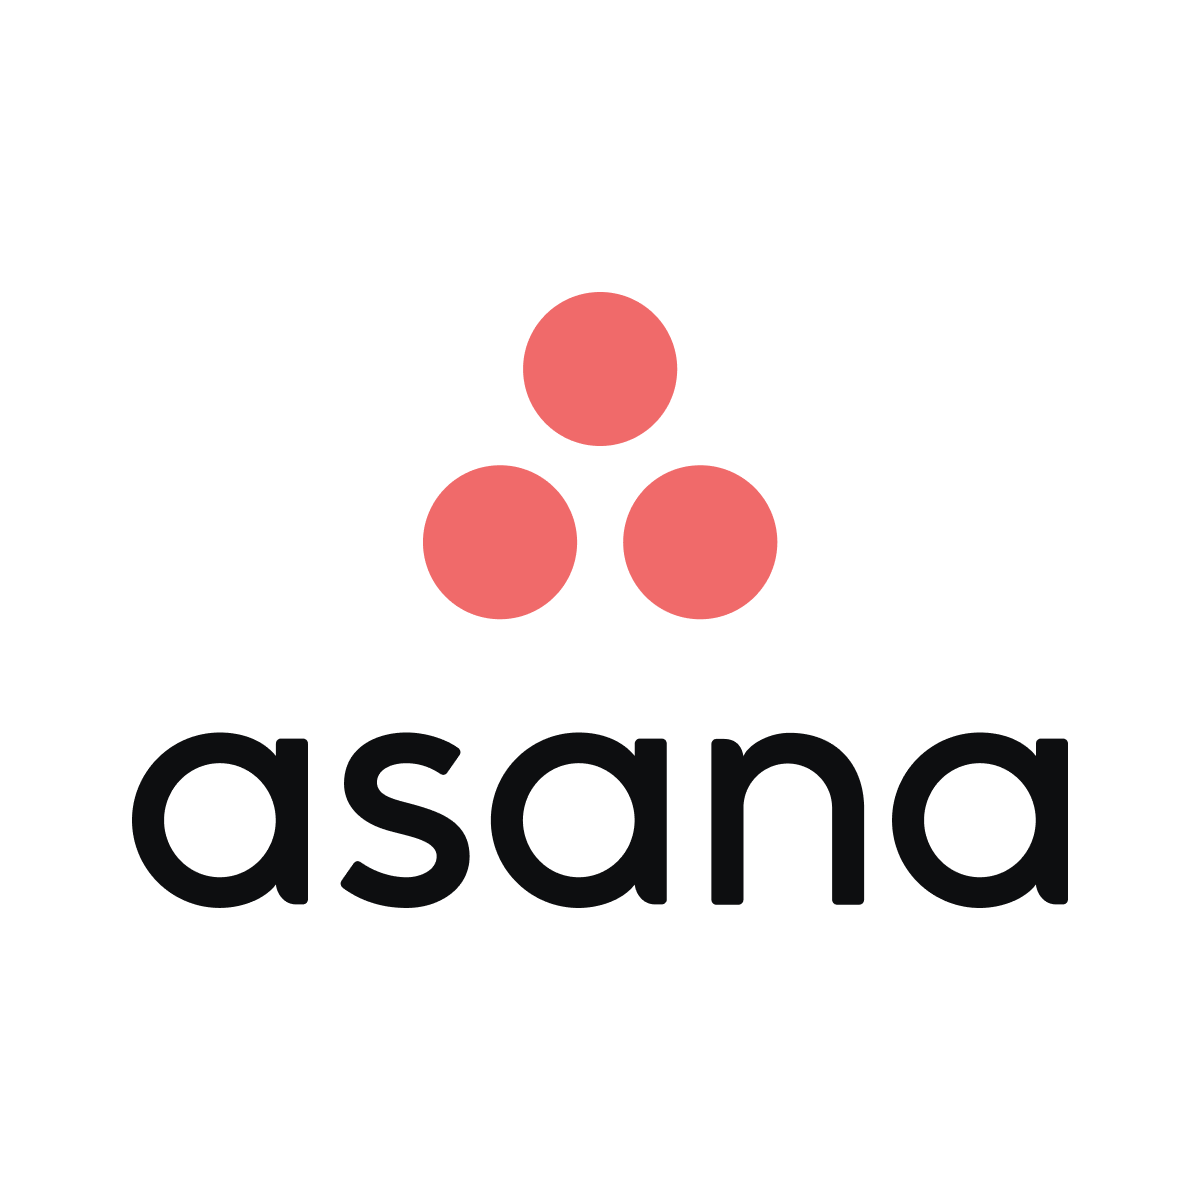 Asana windows app download download adobe after effects cs5 full crack